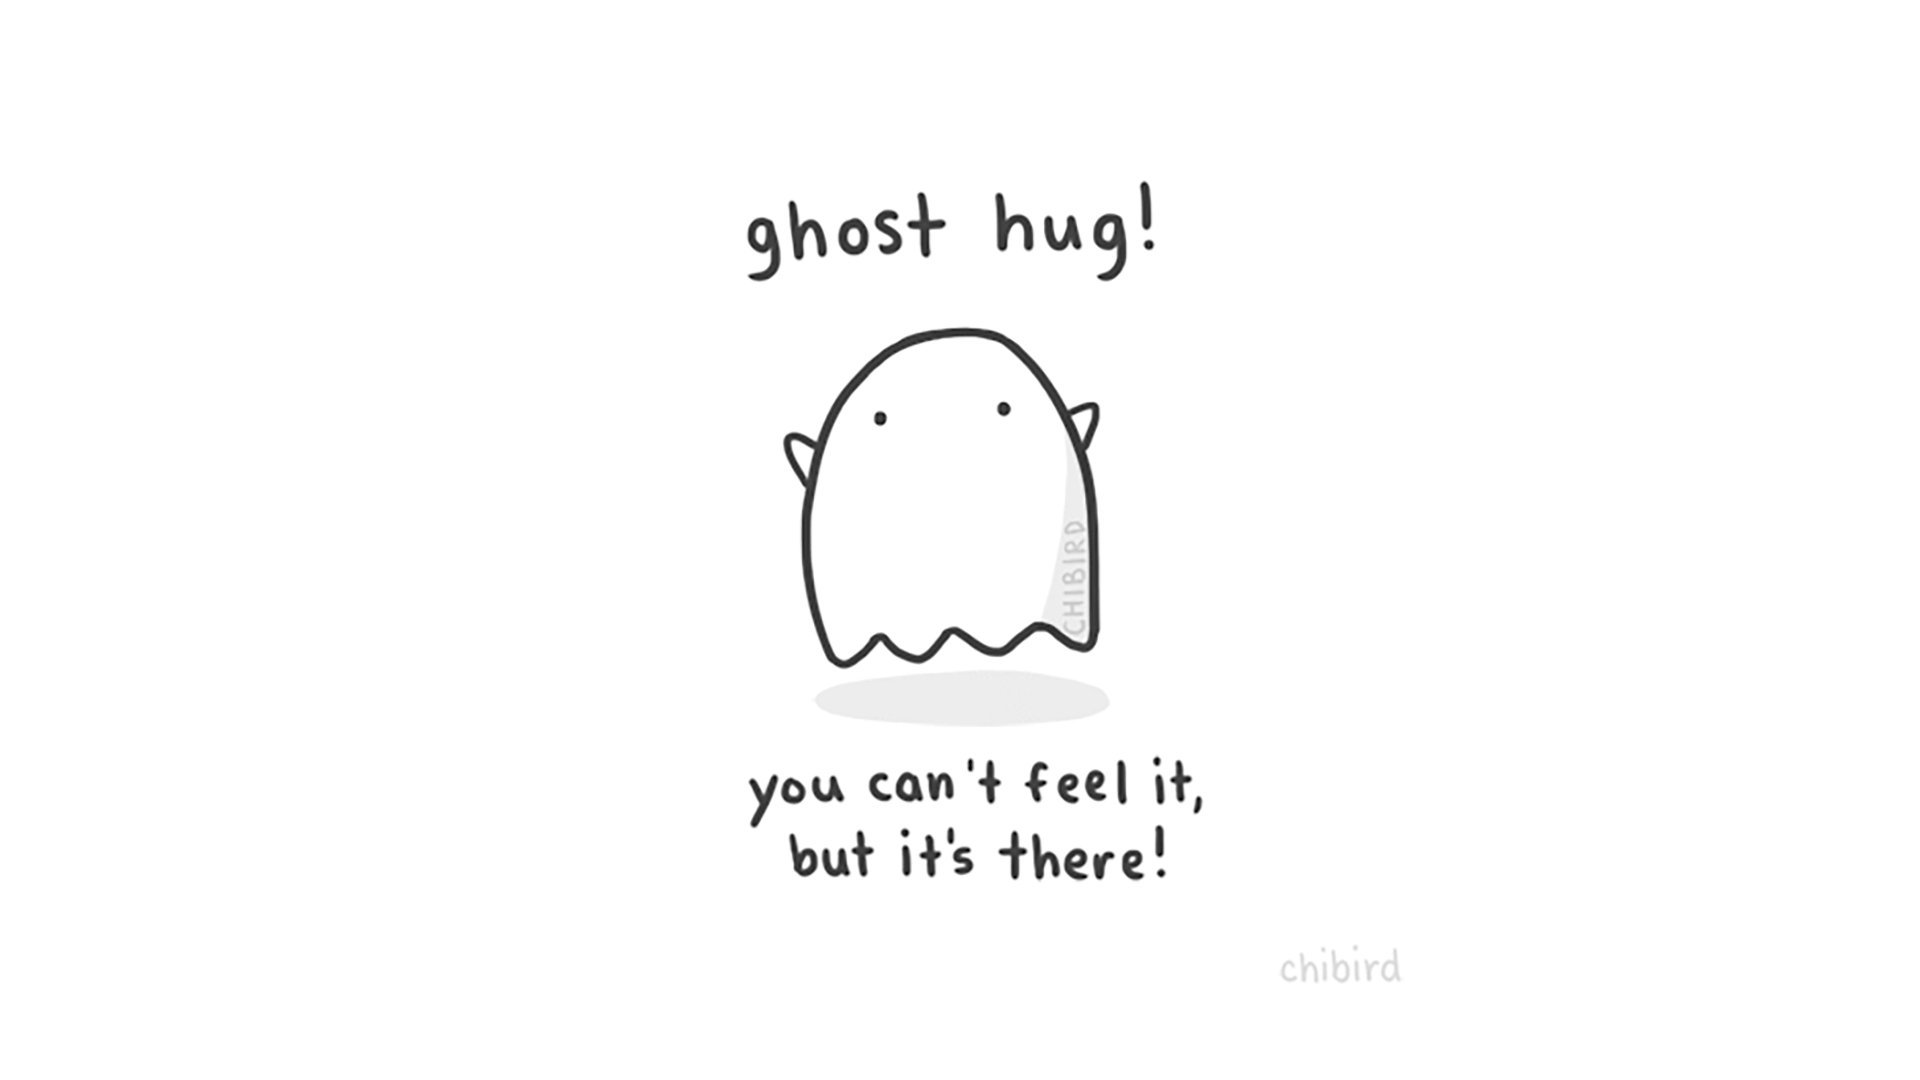 Ghost Hug by chibird